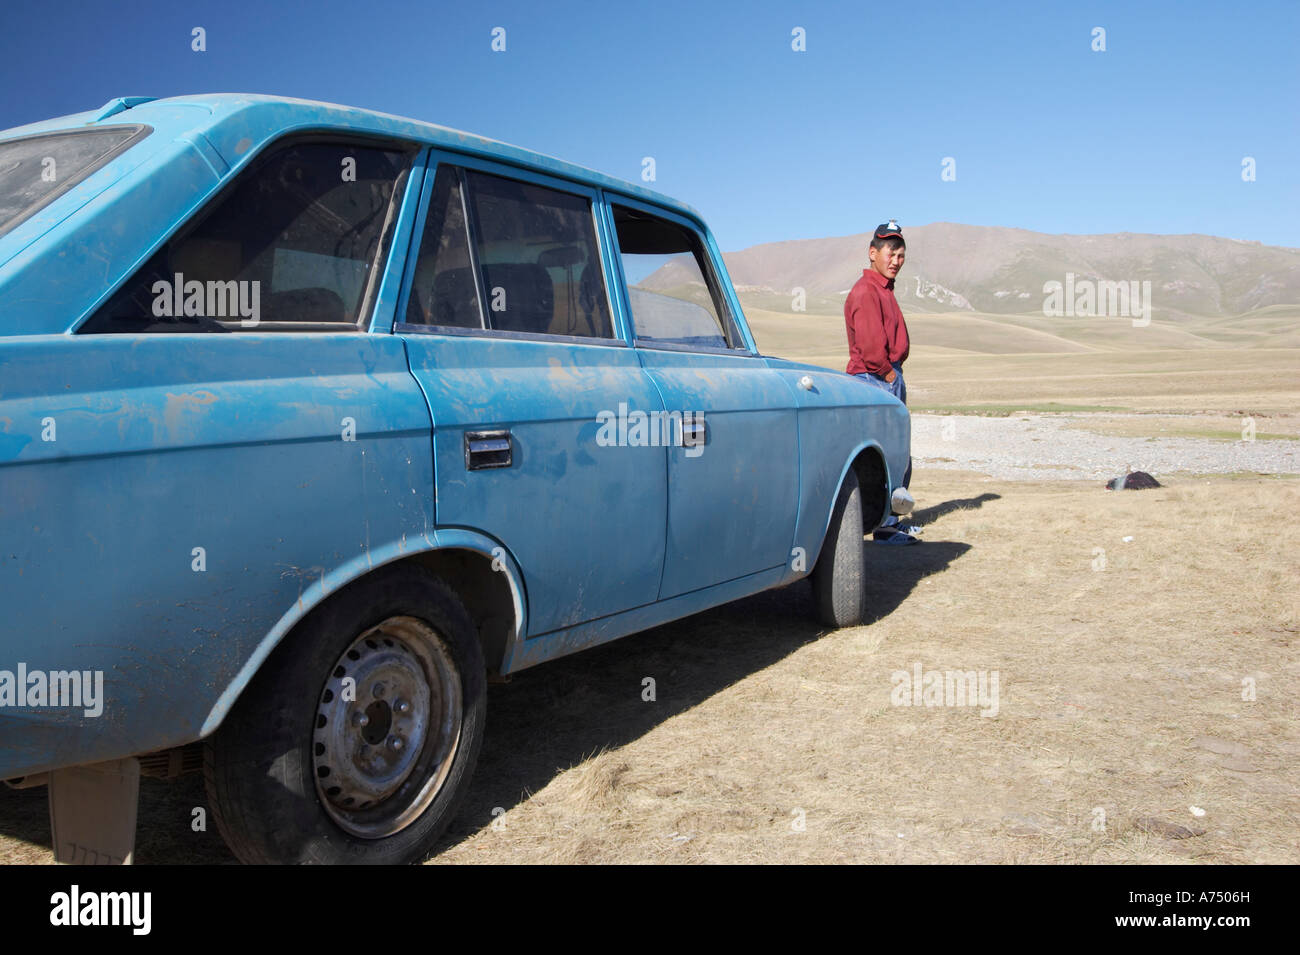 Hombre Kirguise de pie junto al viejo coche comunista Foto de stock